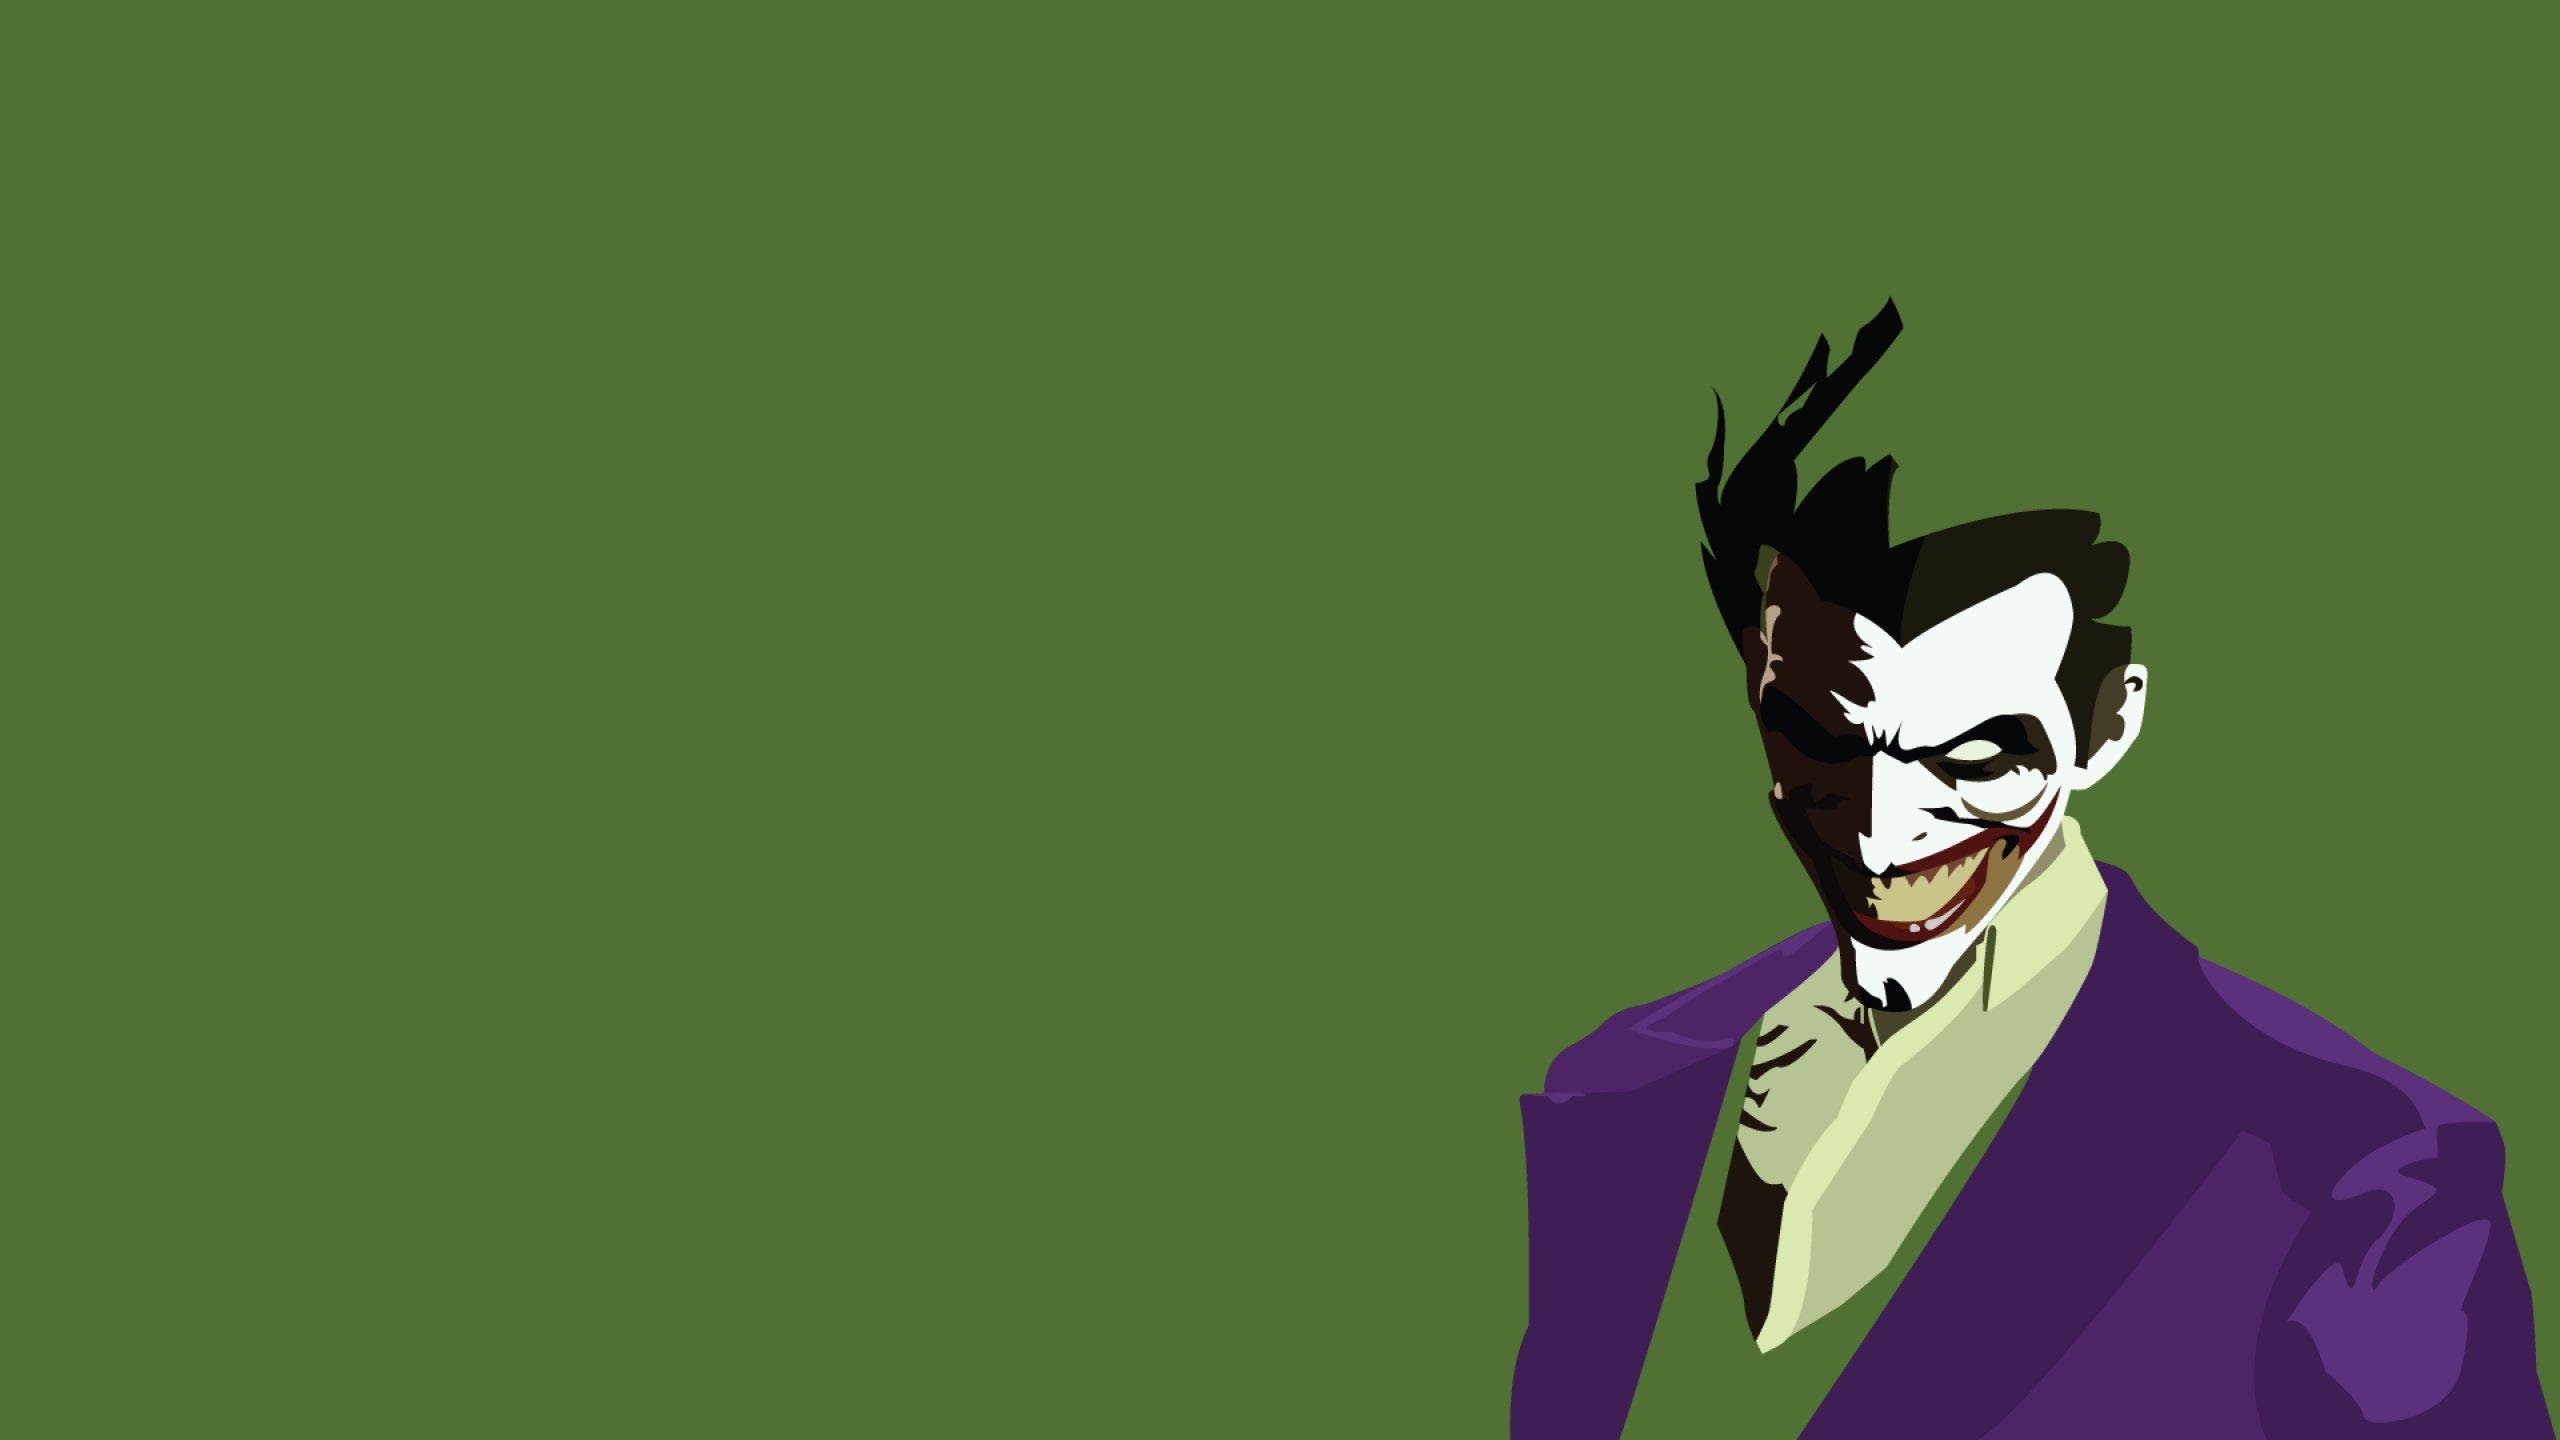 35 Gambar Wallpaper Hd Kartun Joker terbaru 2020